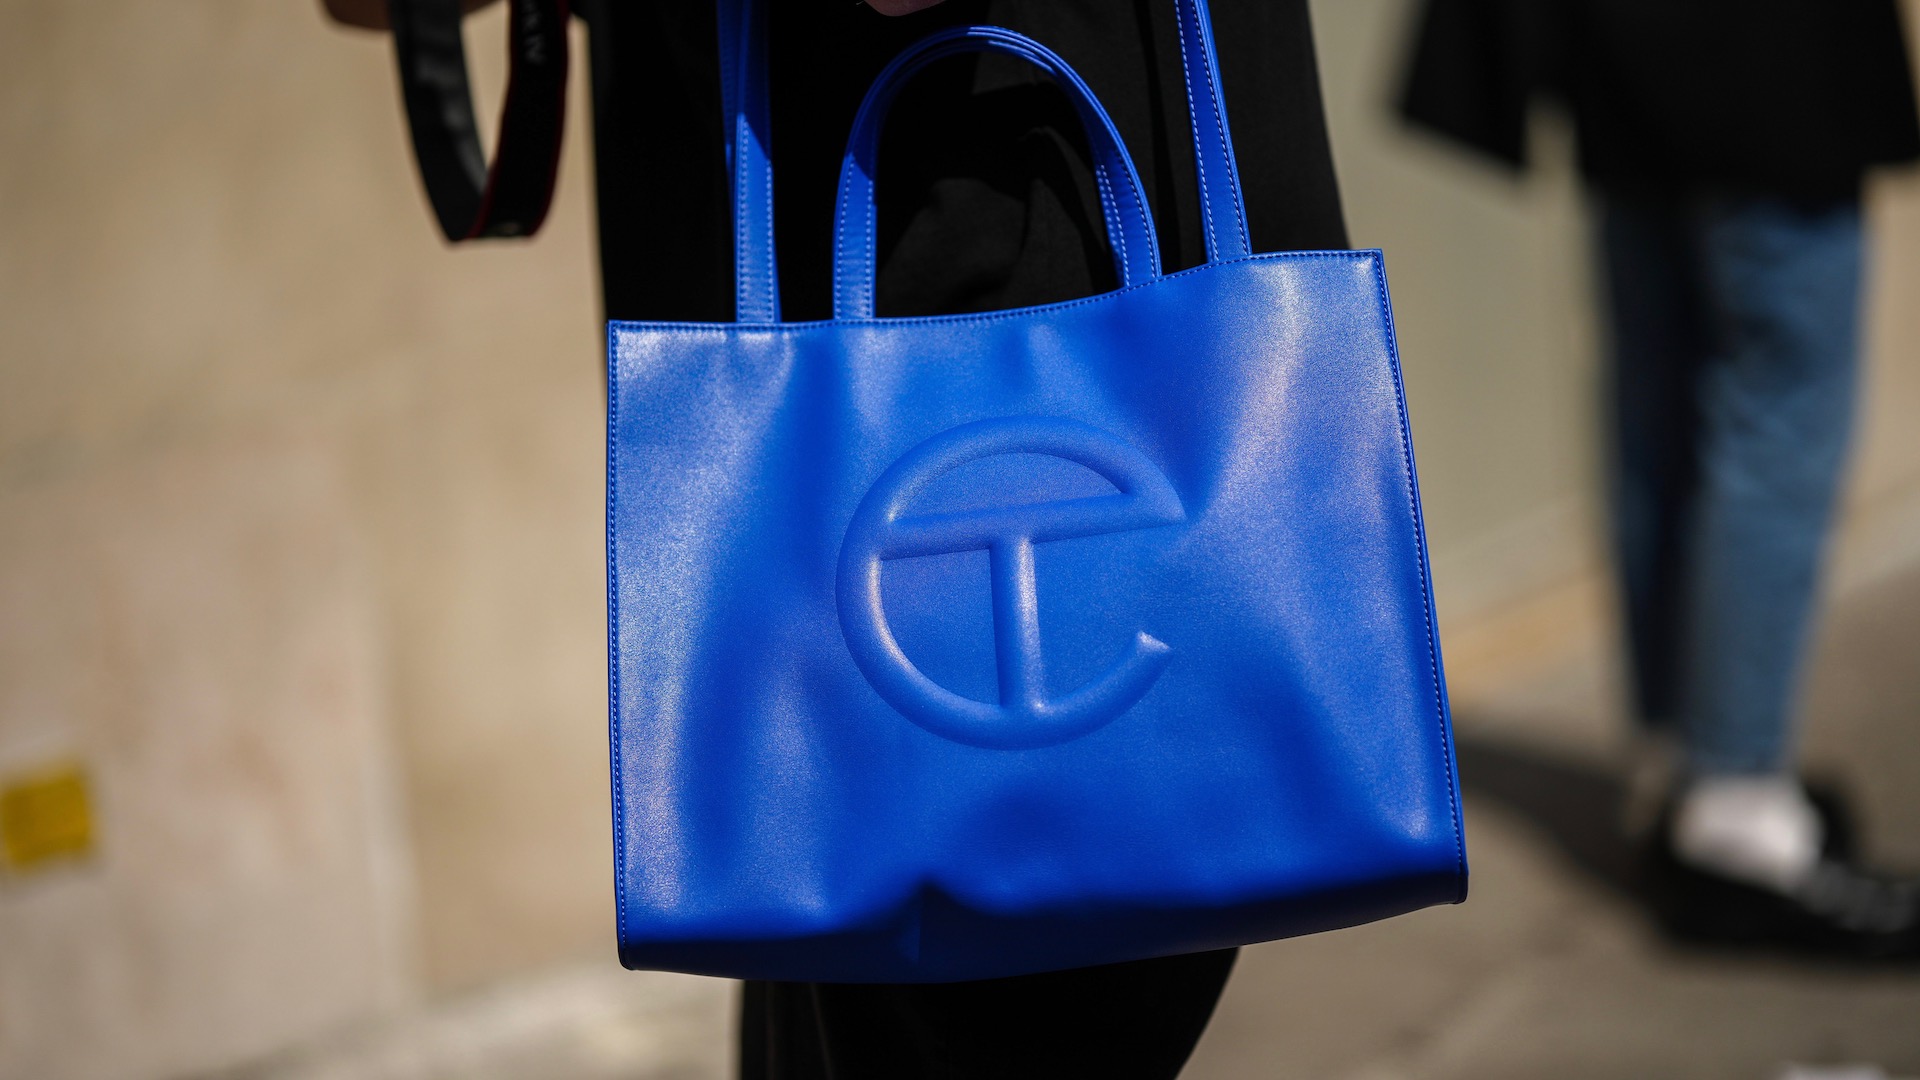 Telfar Amazon shopping bag sale tote bag restocked after Oprahs Favorite  Things